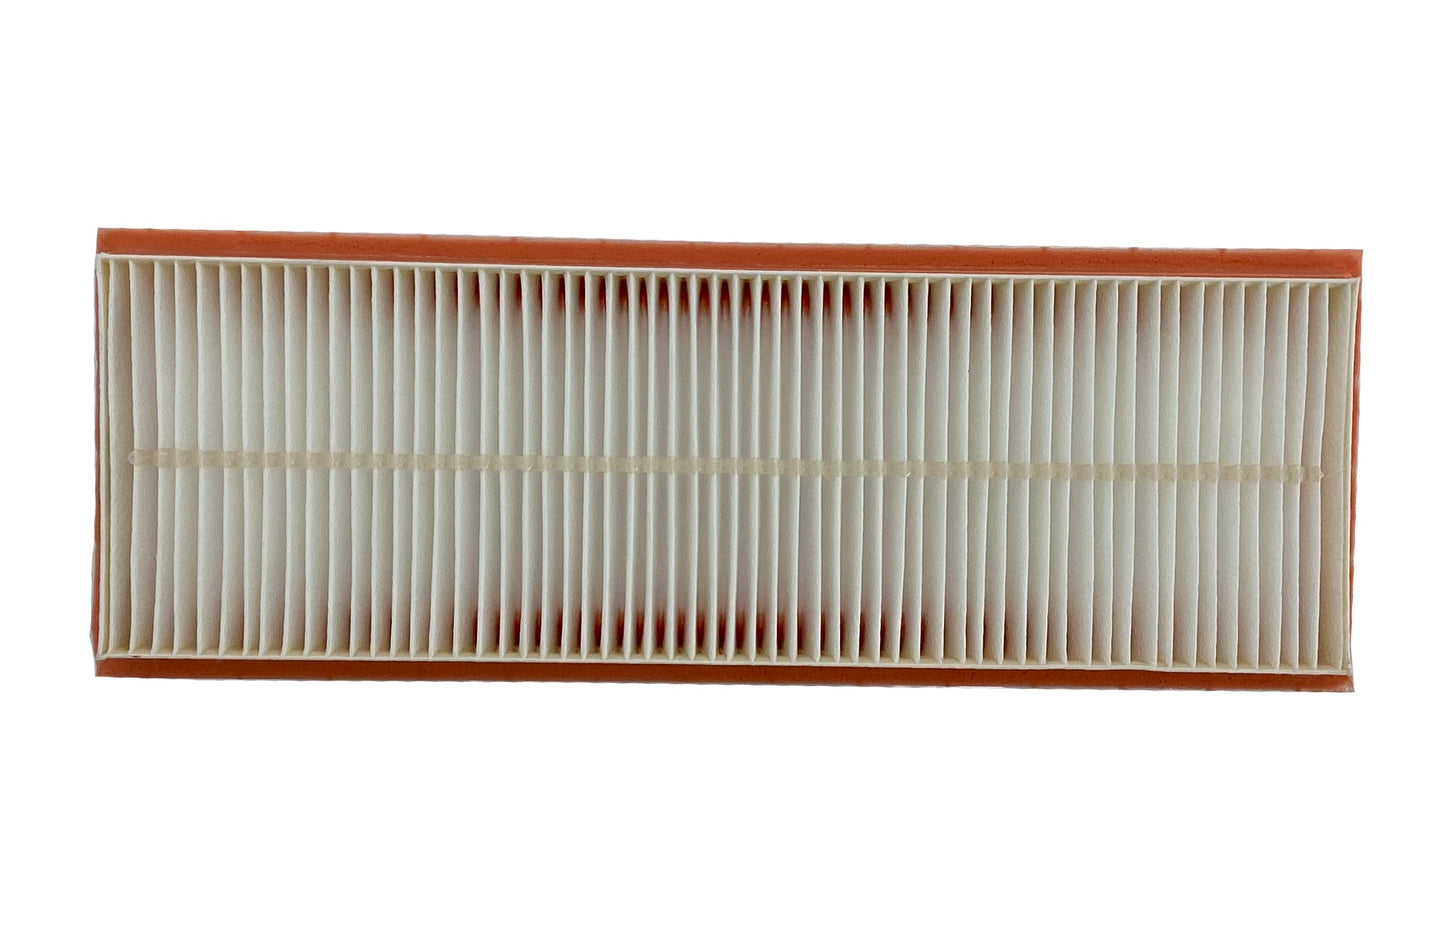 John Deere Original Equipment Air Filter - RE195491